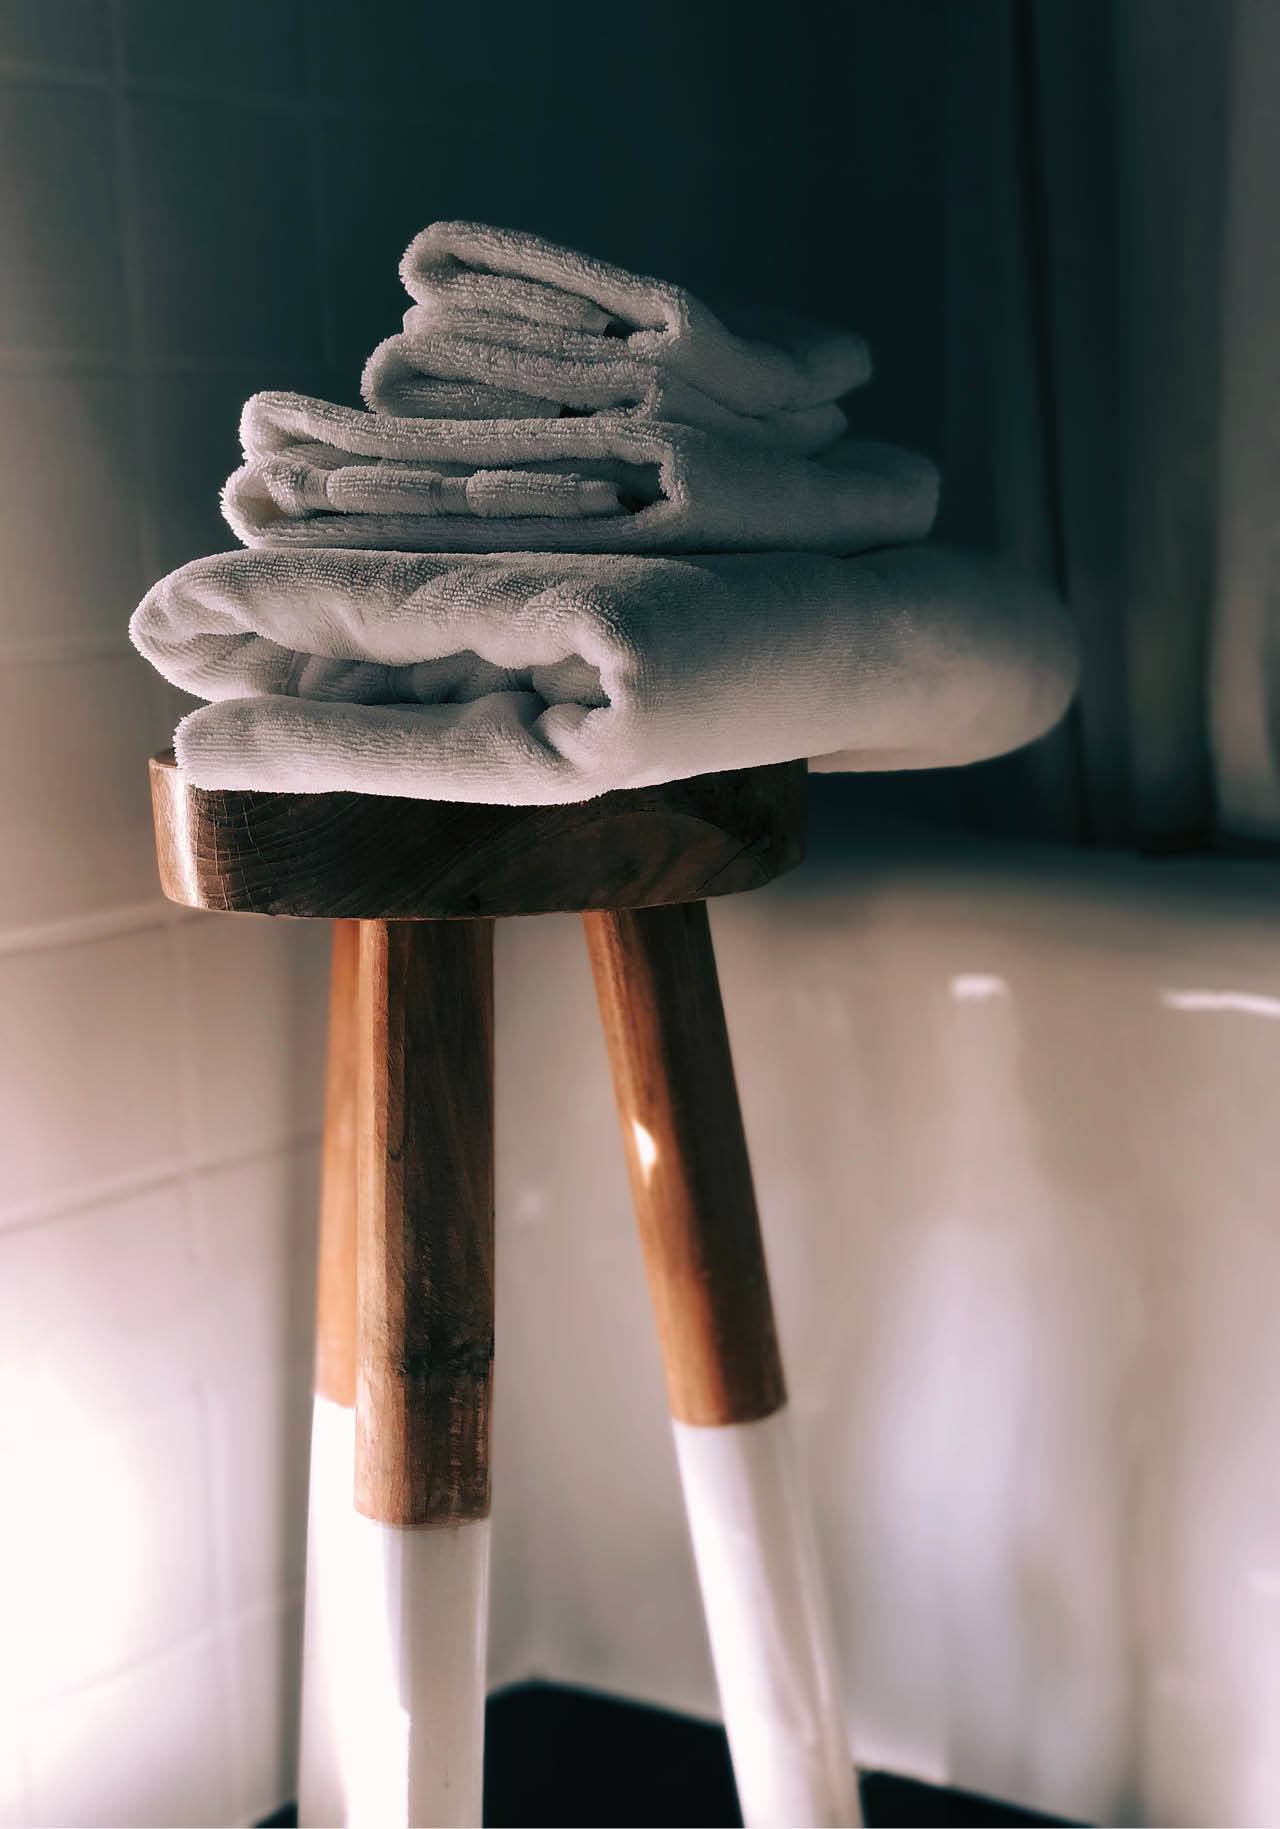 trucos para mantener orden sin esfuerzo tender toallas humedas